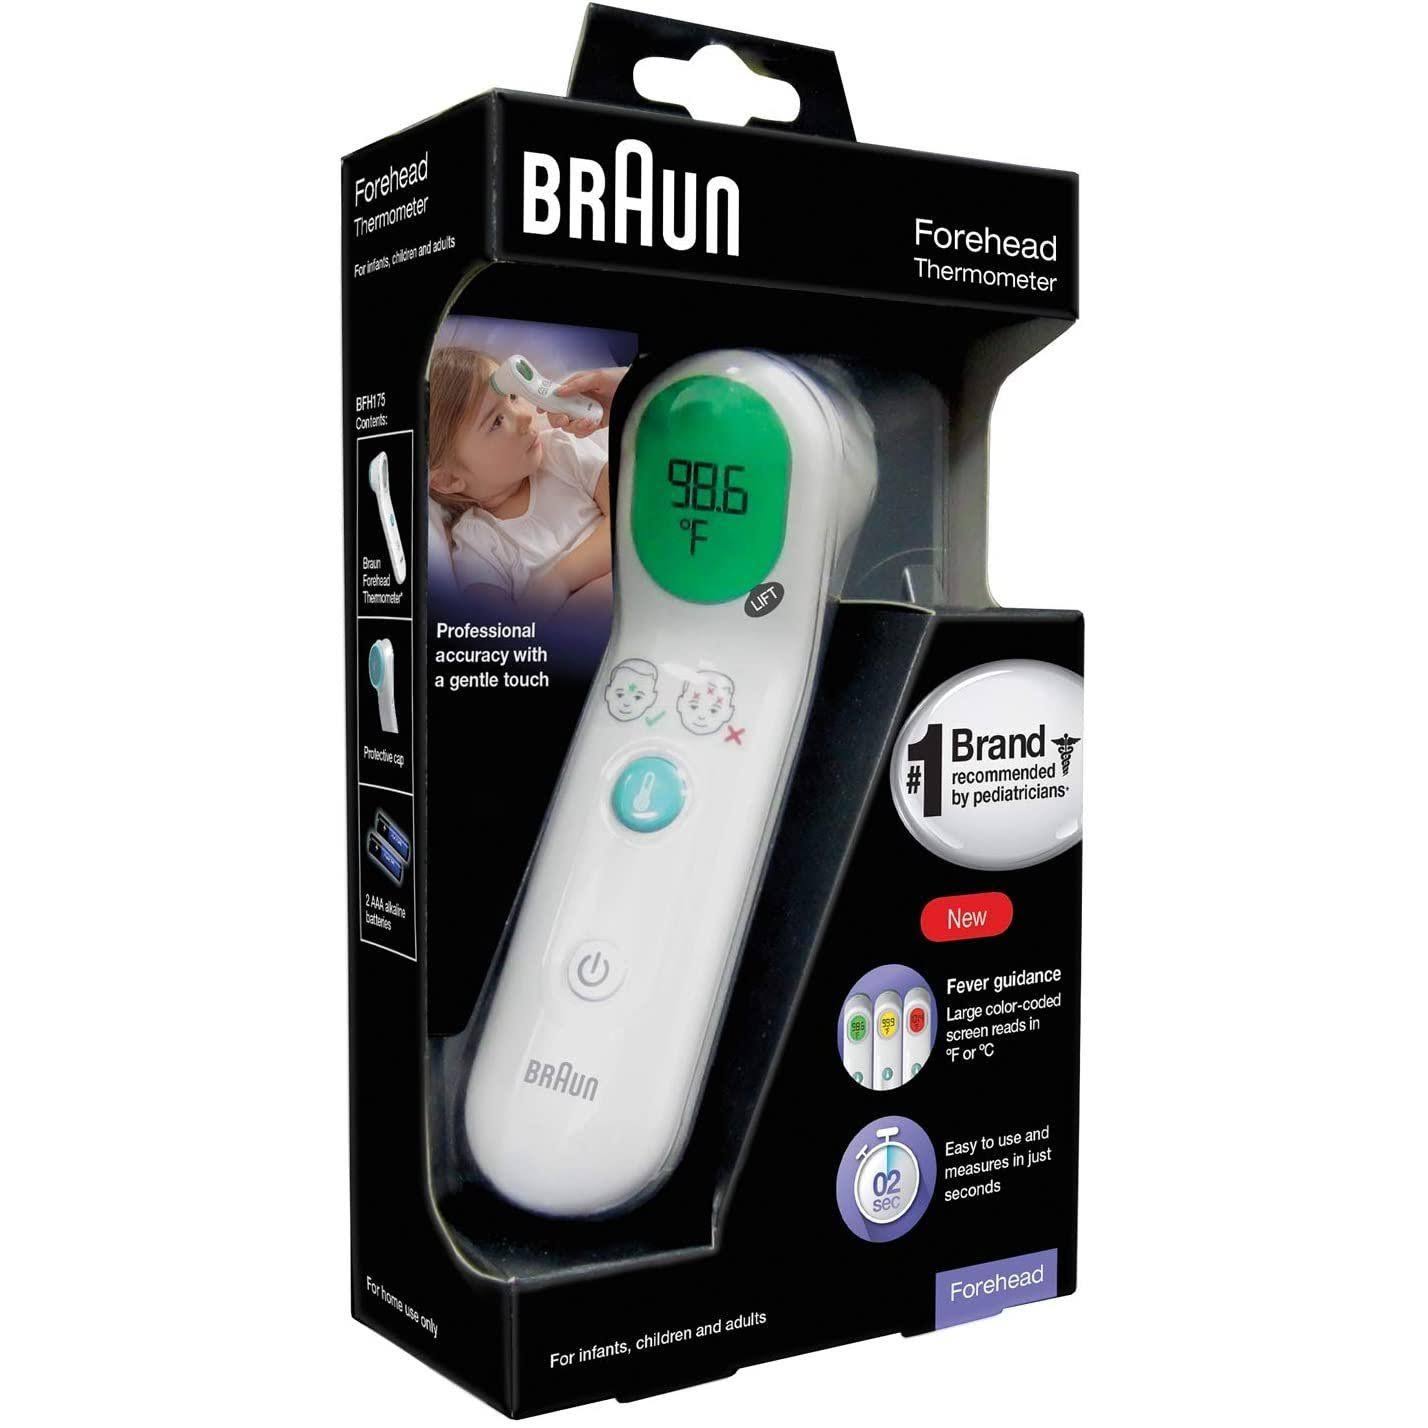 Braun Forehead Thermometer